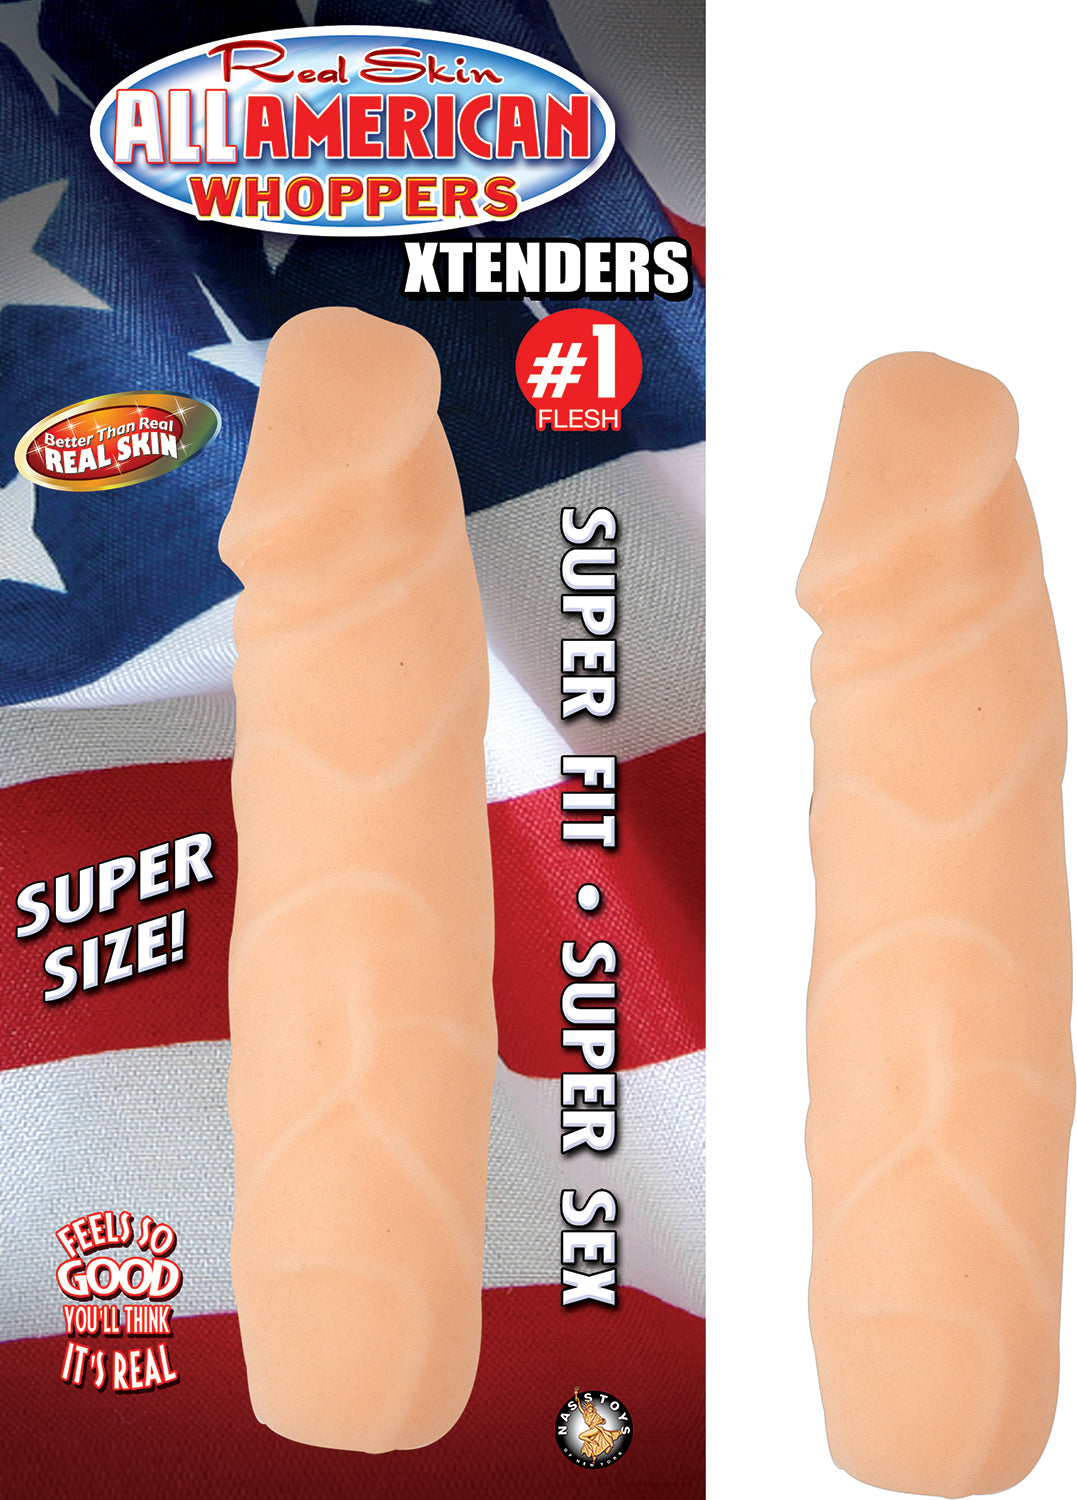 All American Whoppers Xtenders #1 Flesh-2